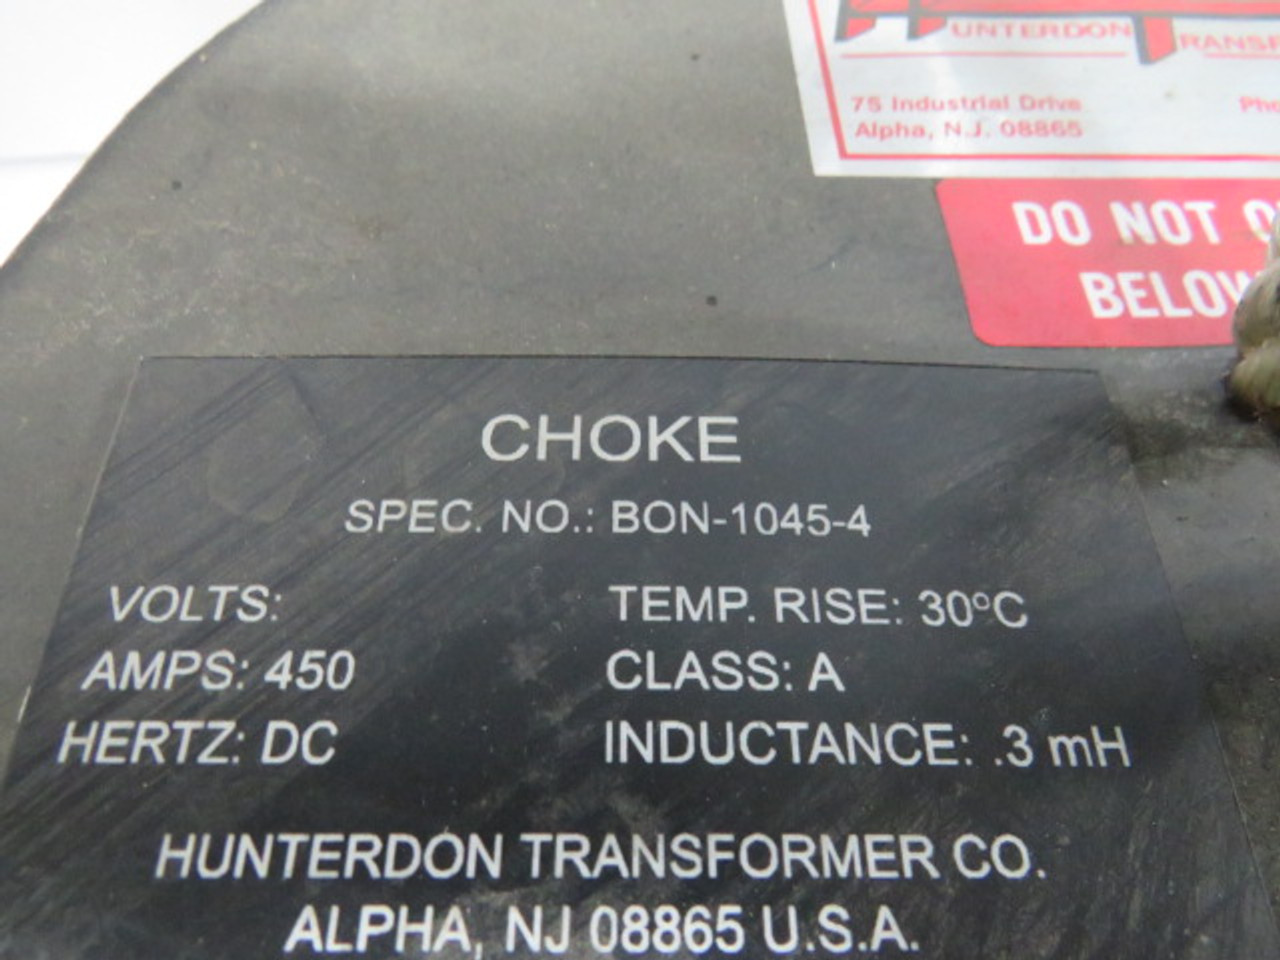 Hunterdon BON-1045-4 Choke 450Amp DC Hz. .3mH USED